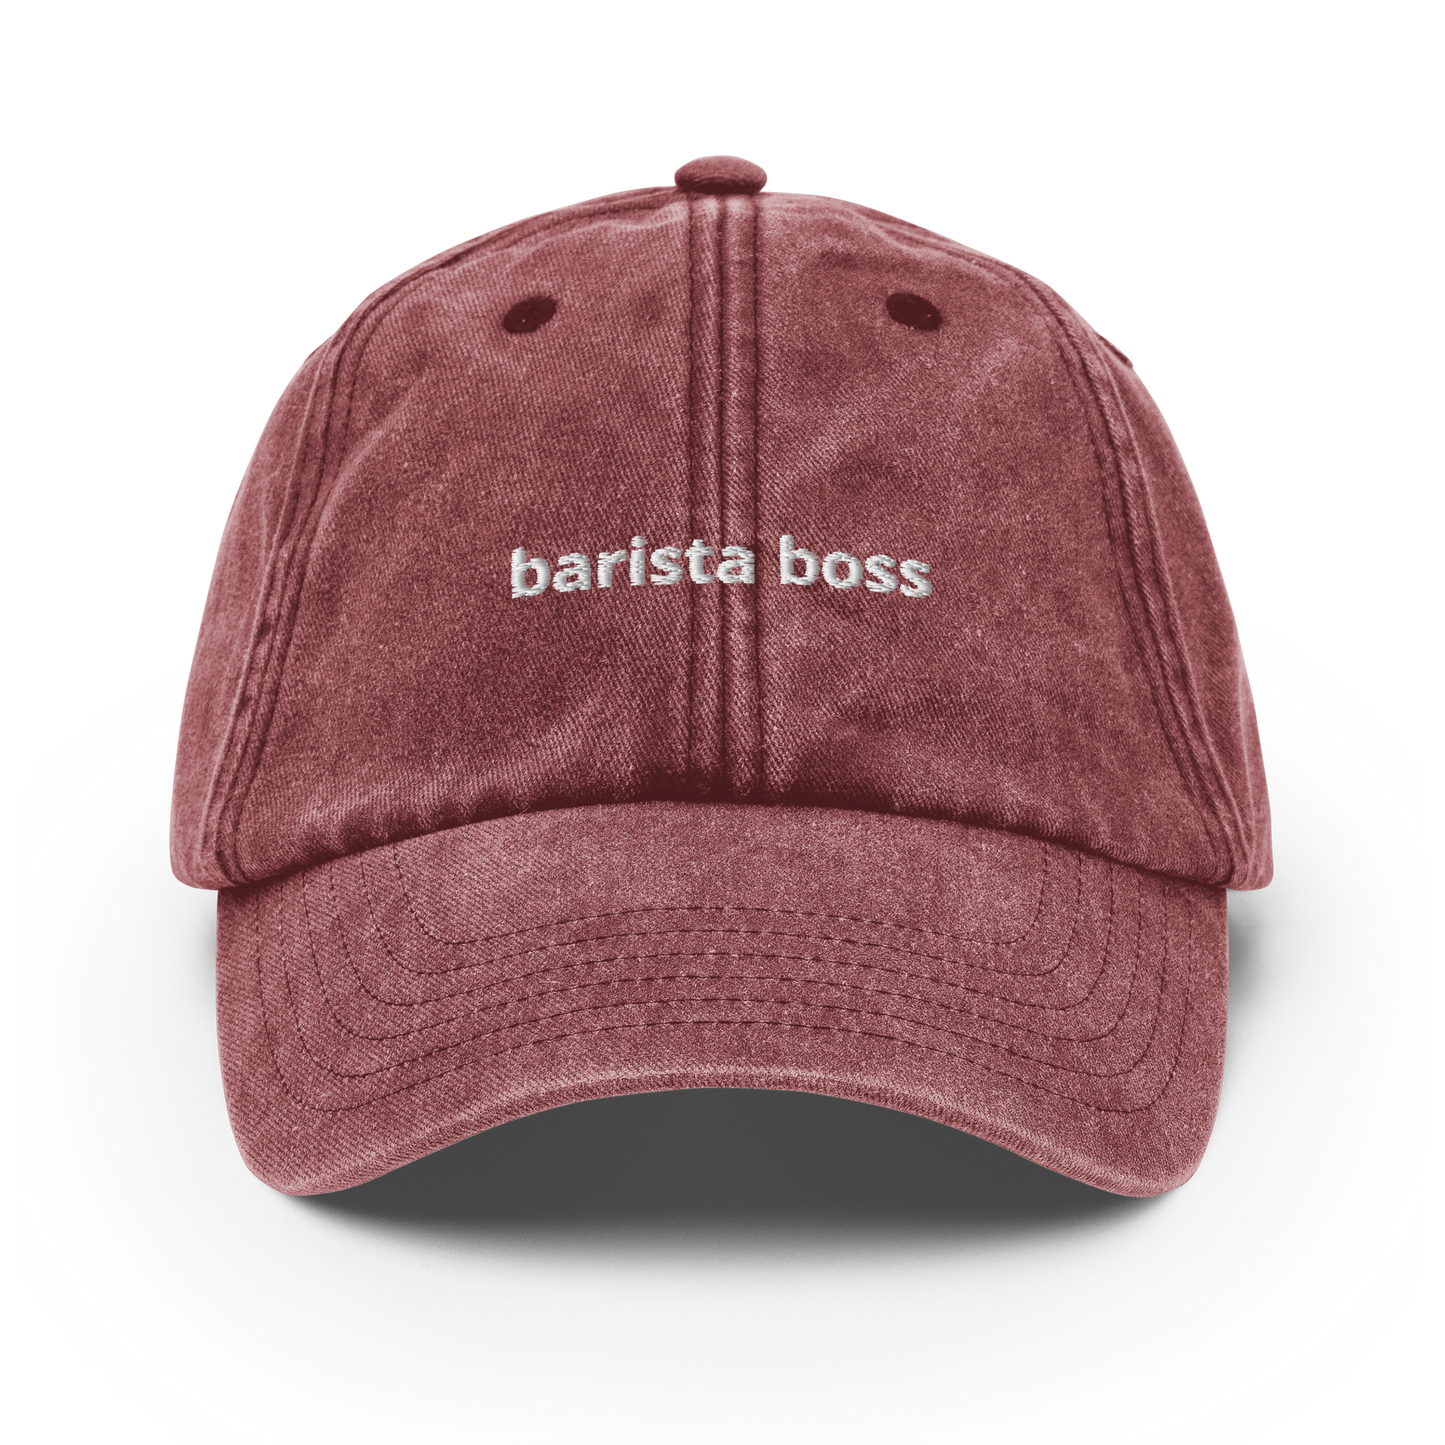 Barista Boss - Vintage Hat